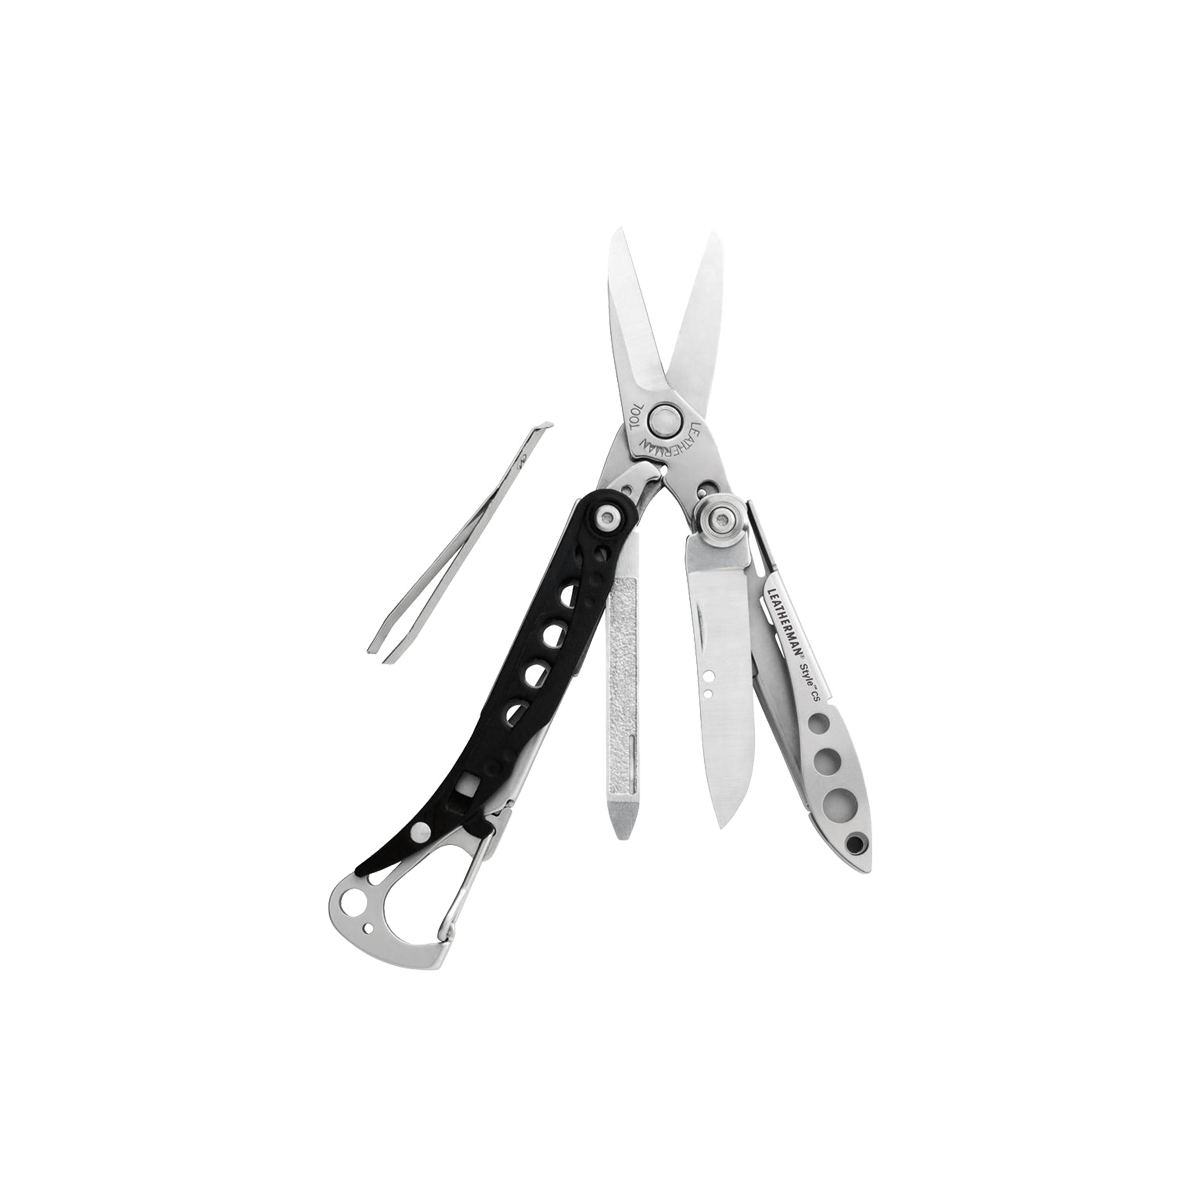 Glass Cutter /Diamond Cutter Head Steel Blade Cutting Tool/Anti-skid Handle  175m